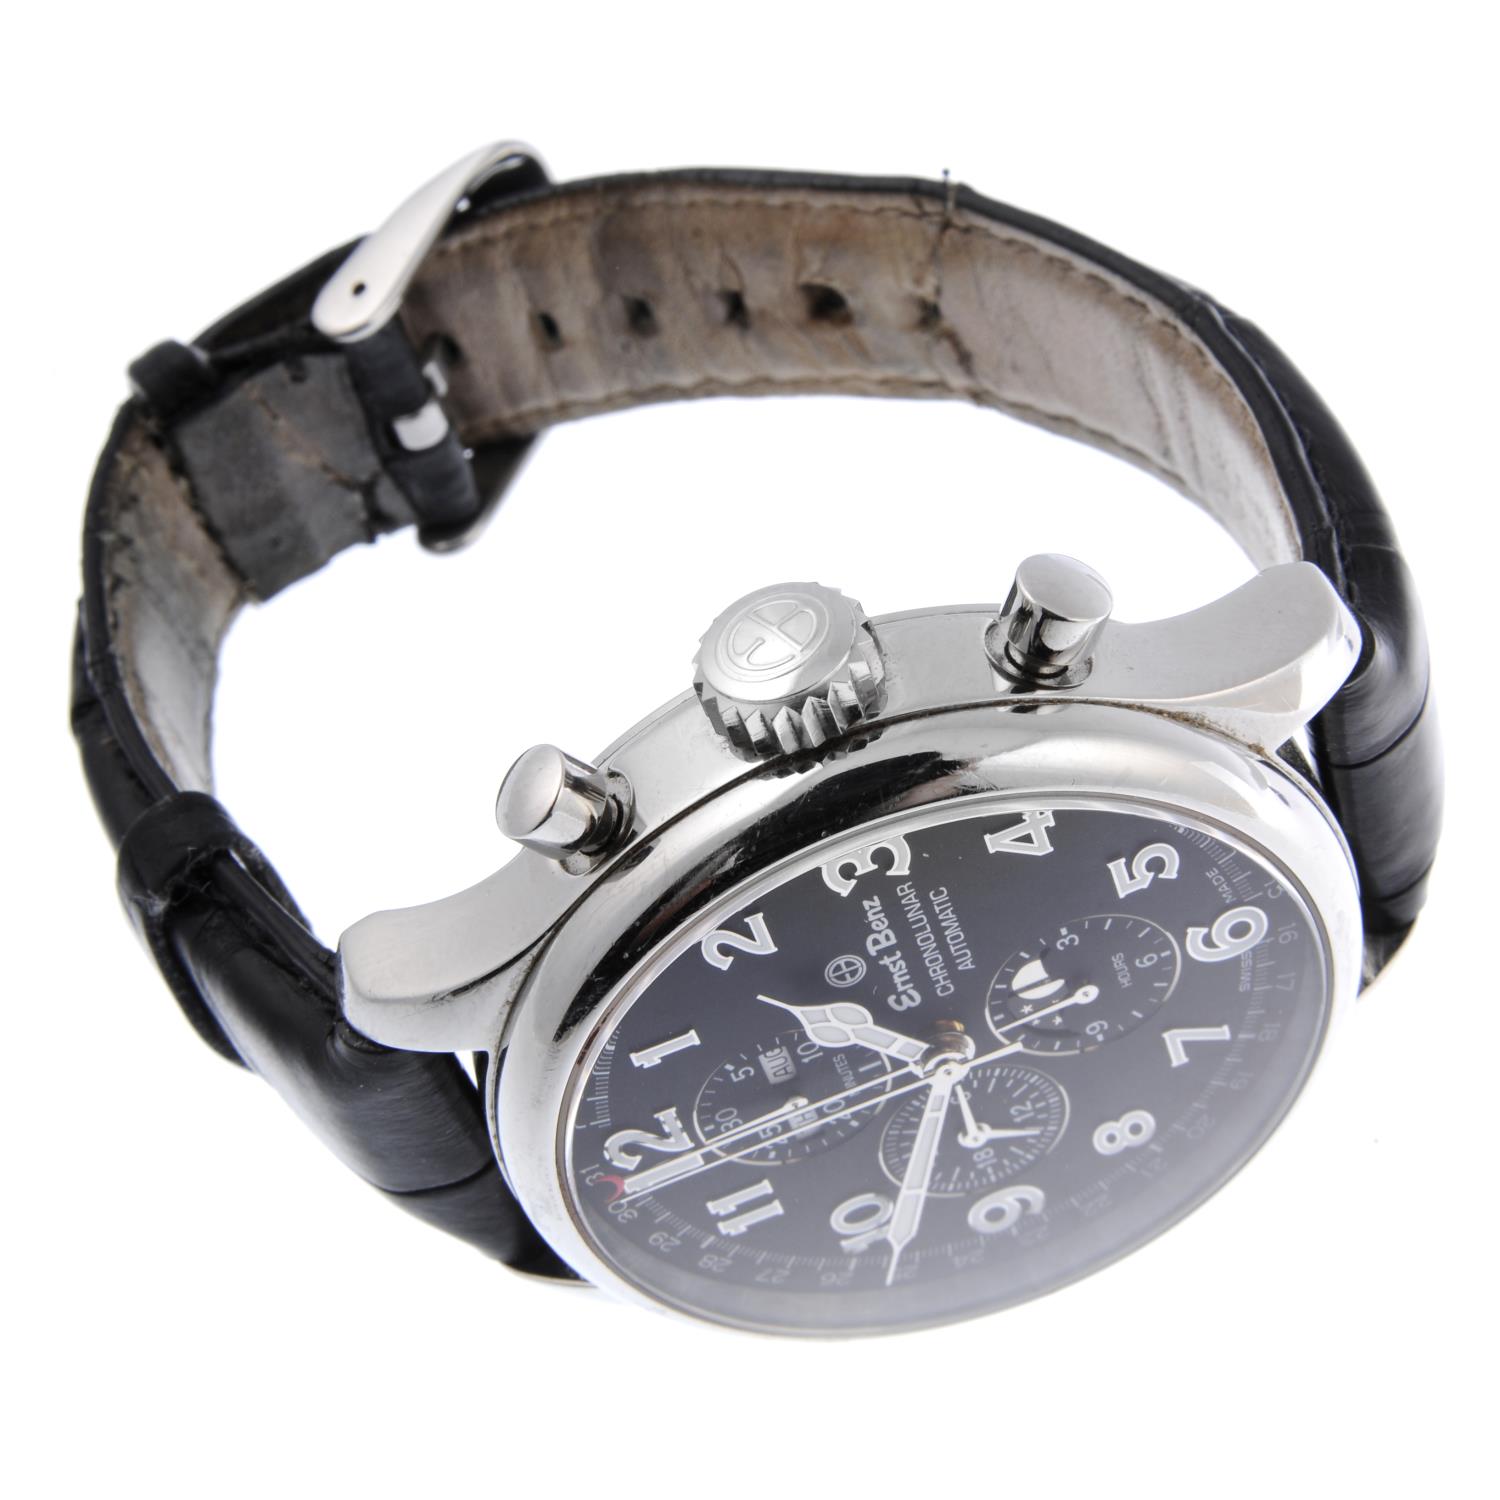 ERNST BENZ - a gentleman's Chronolunar chronograph wrist watch. - Image 4 of 4